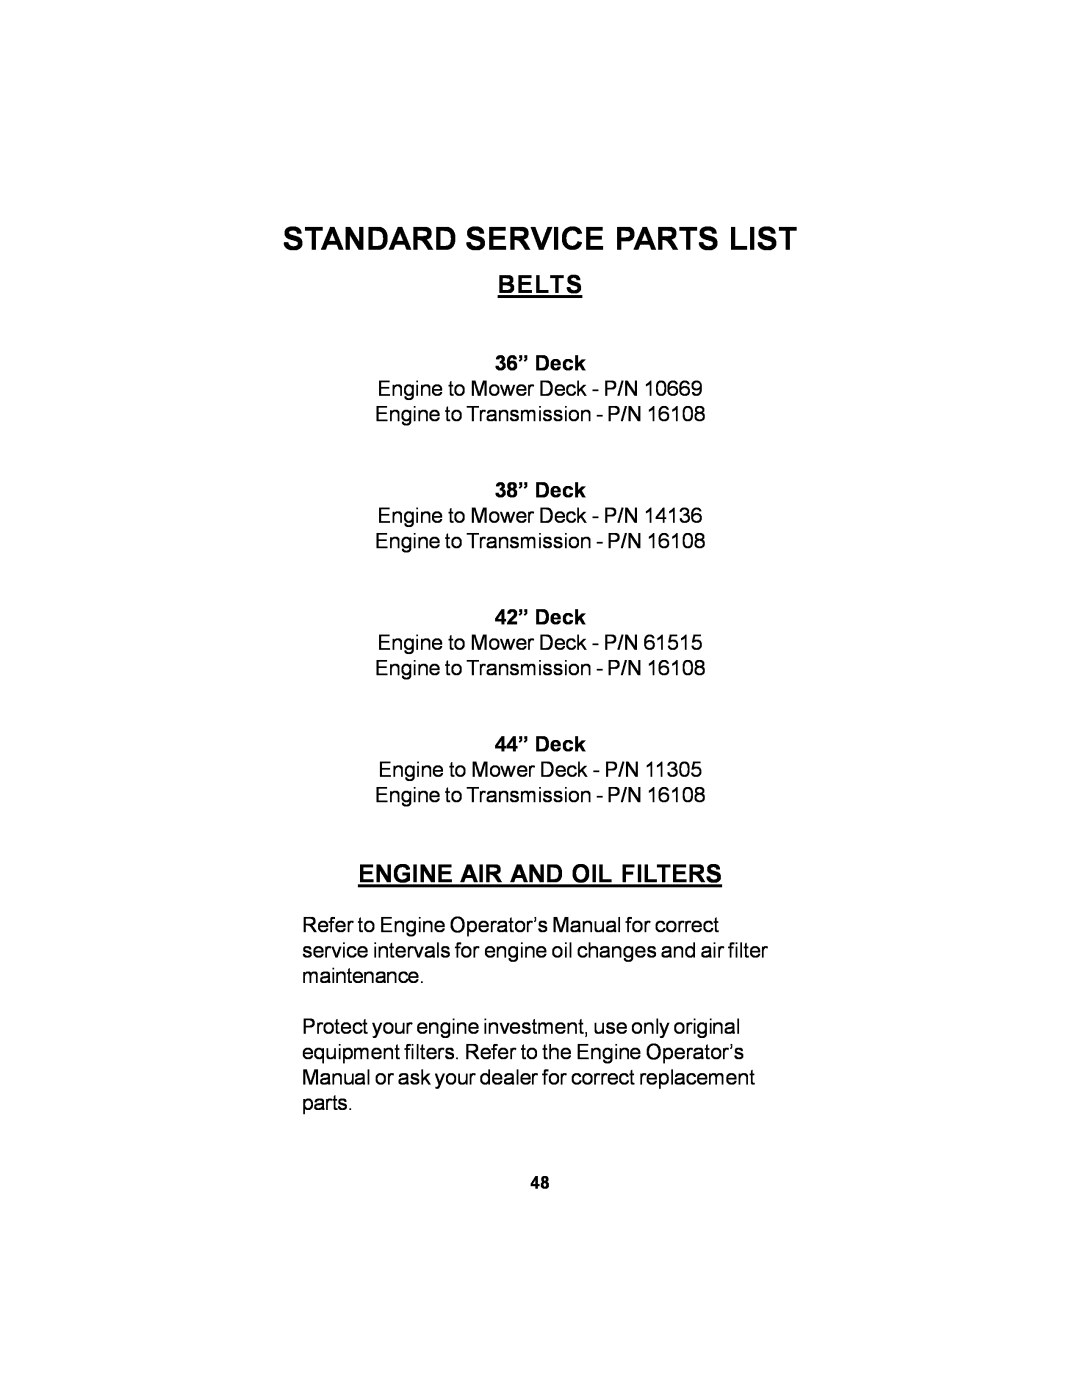 Dixon manual Engine Air And Oil Filters, Standard Service Parts List, Belts, 36” Deck, 38” Deck, 42” Deck, 44” Deck 